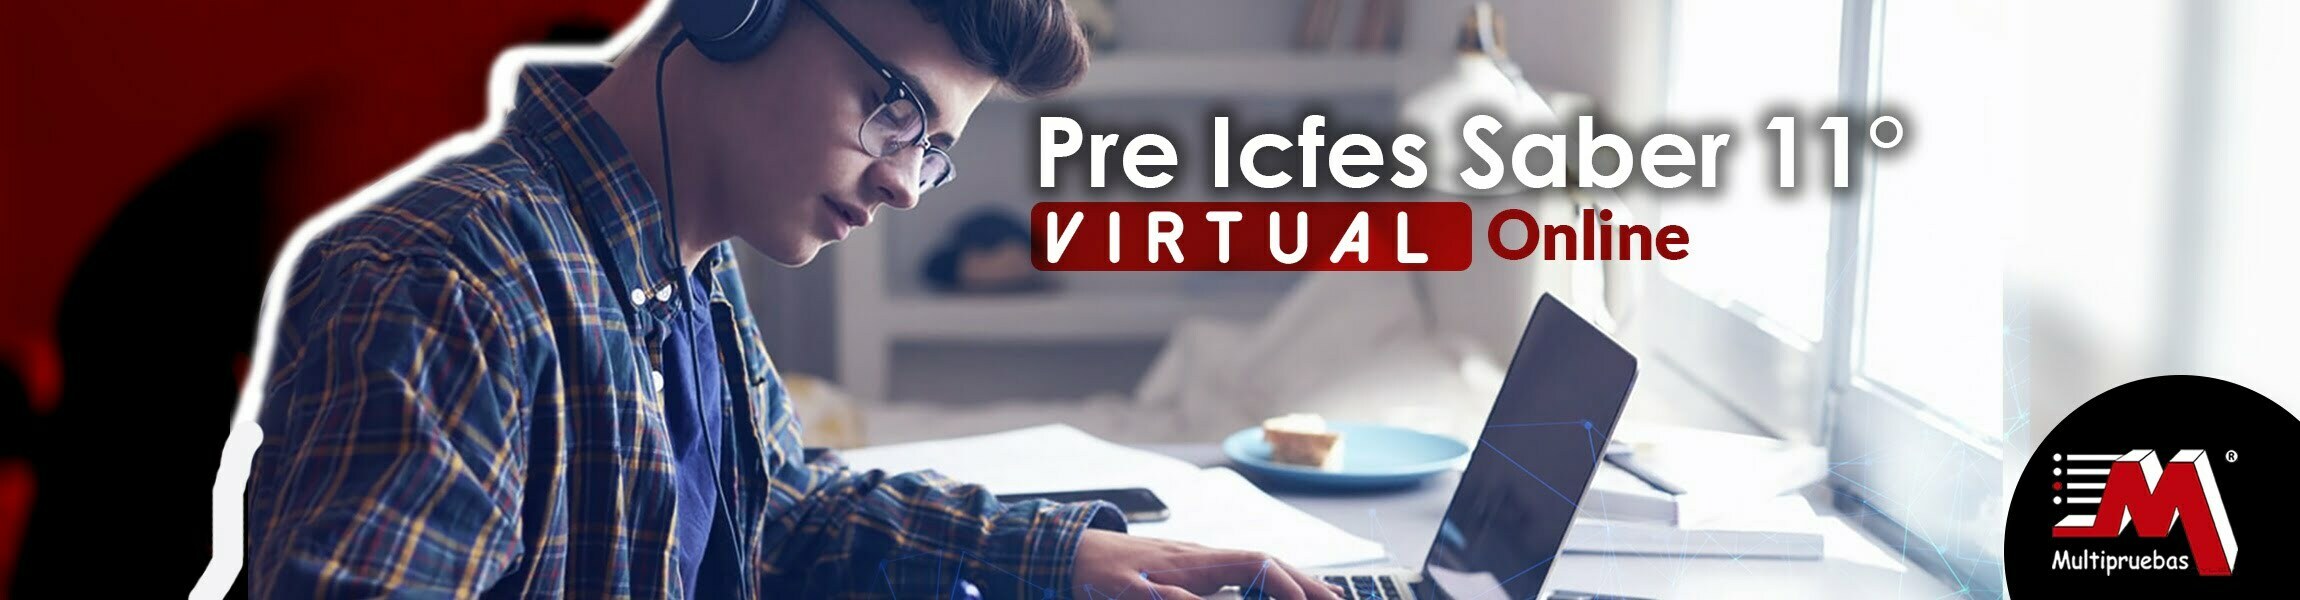 preicfes virtual